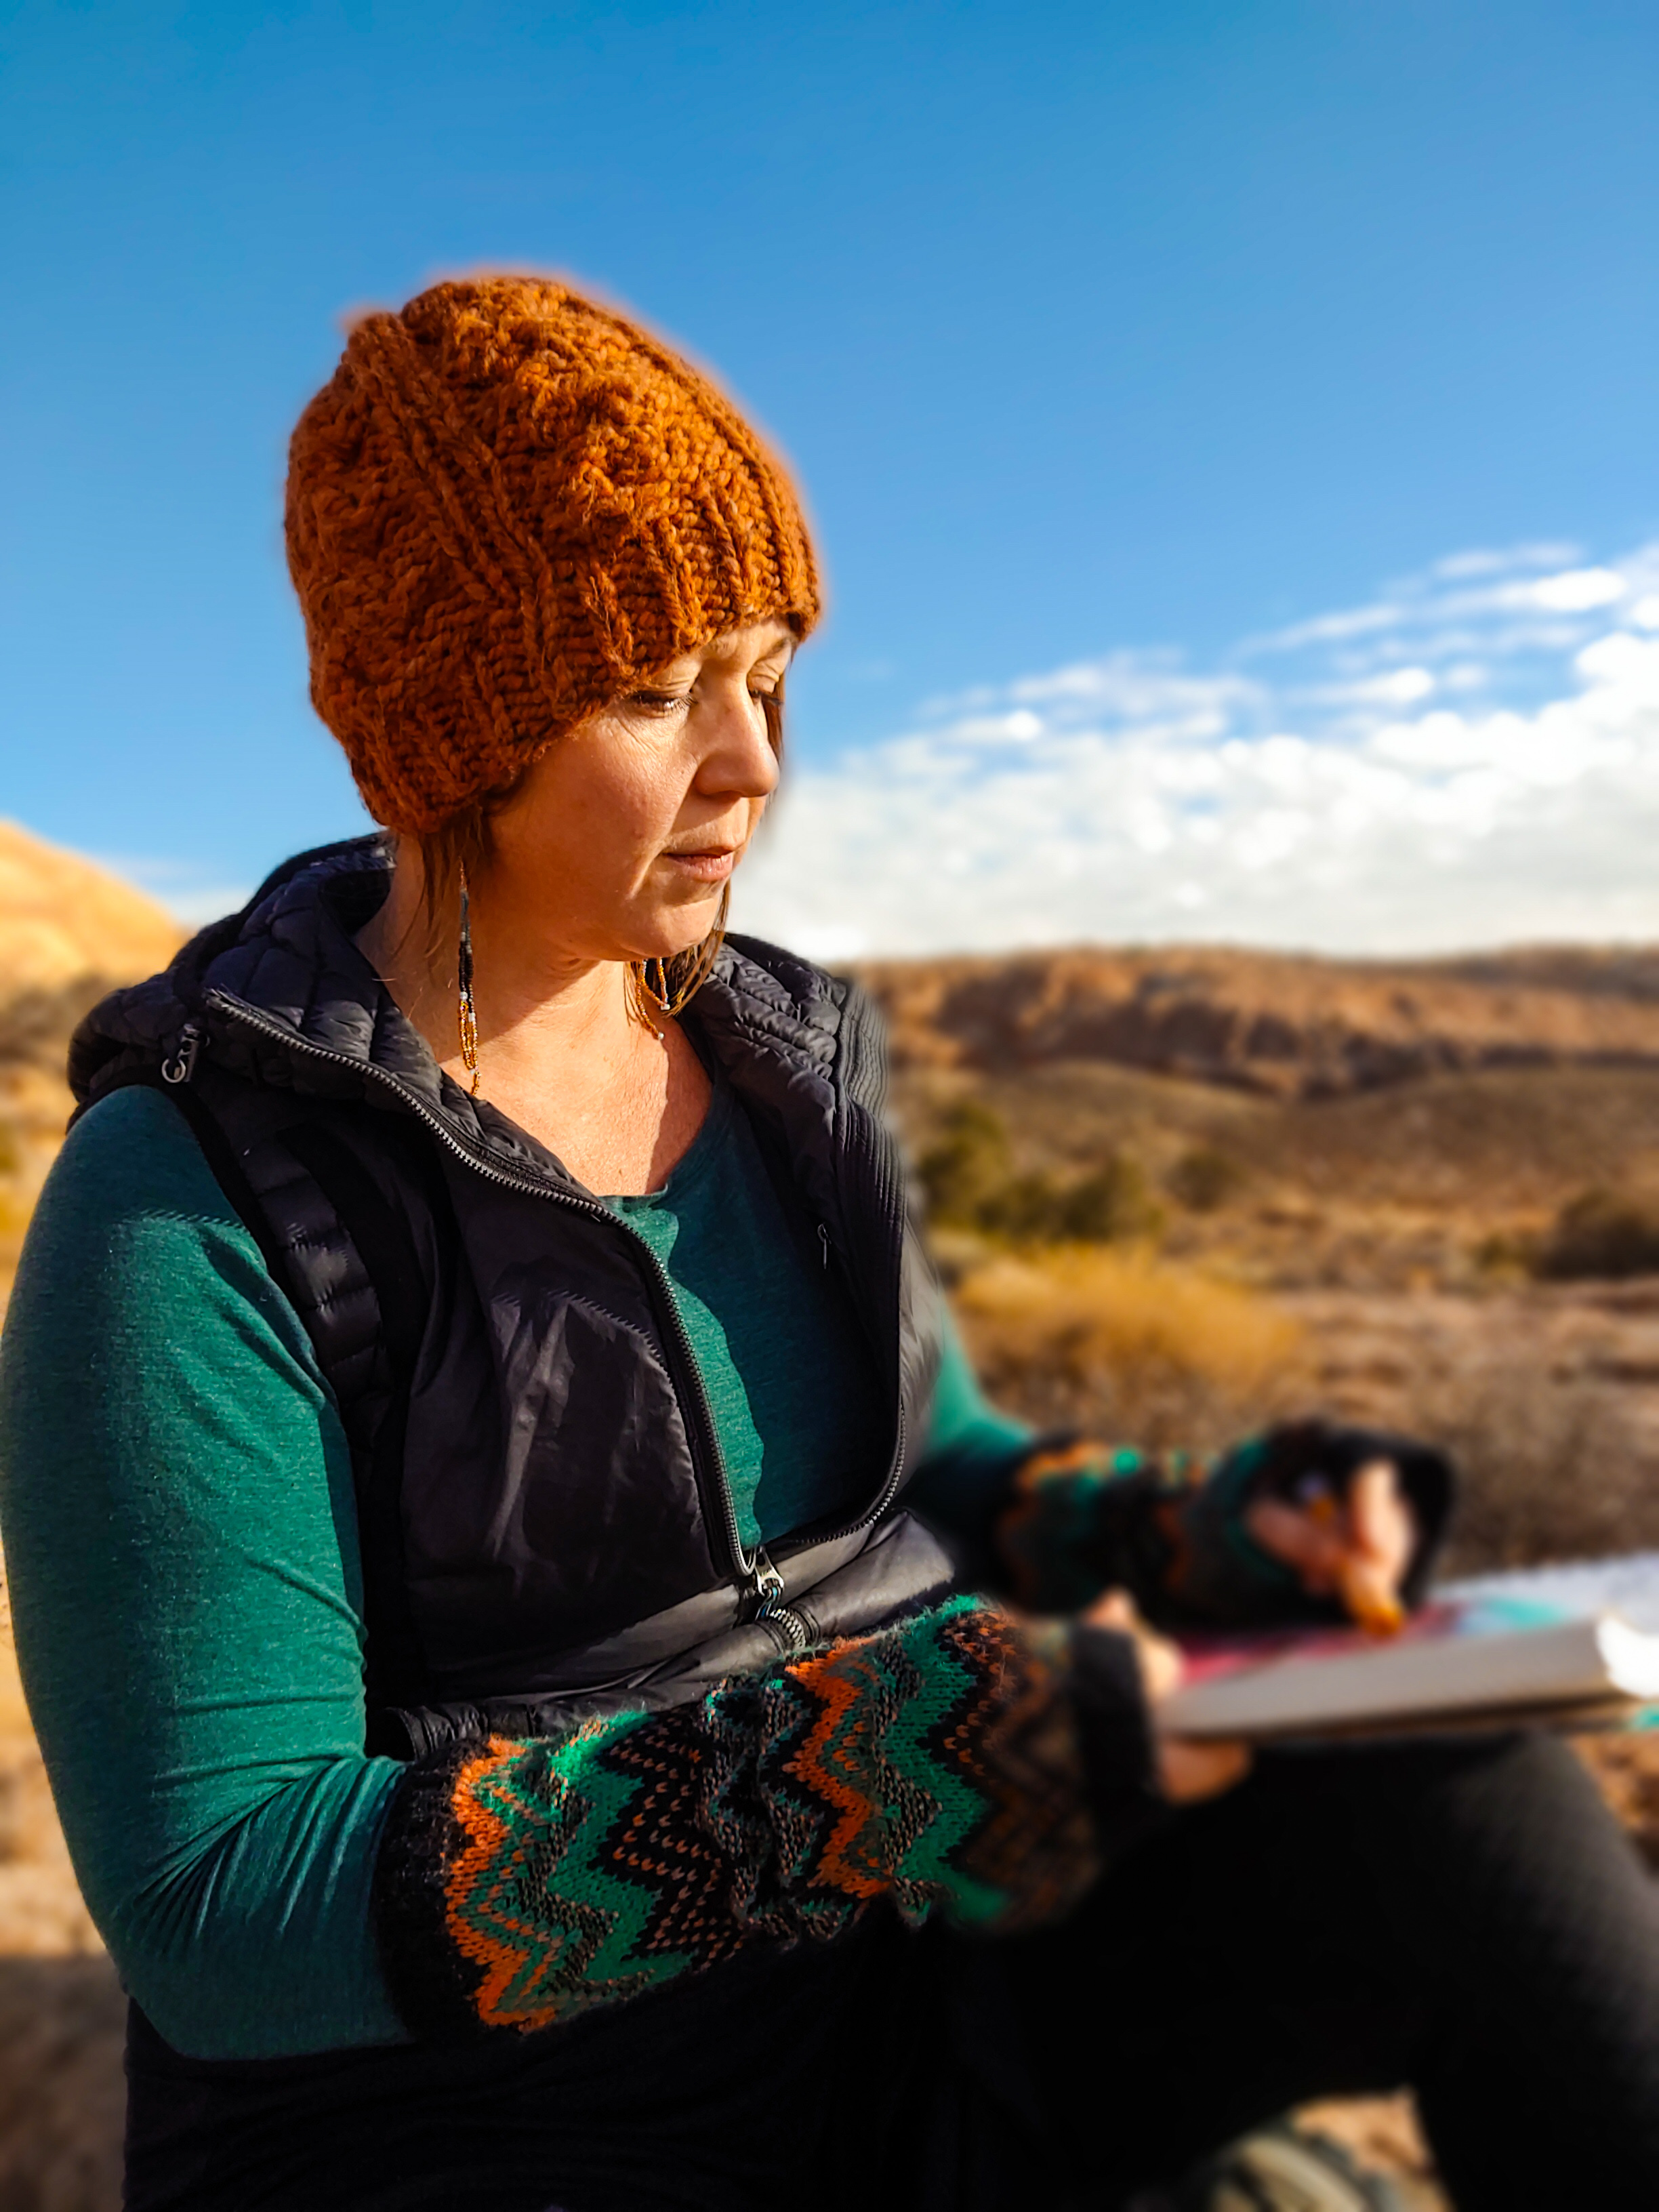 light-skinned woman in orange knit hat sketches in notebook, tan rocky backdrop